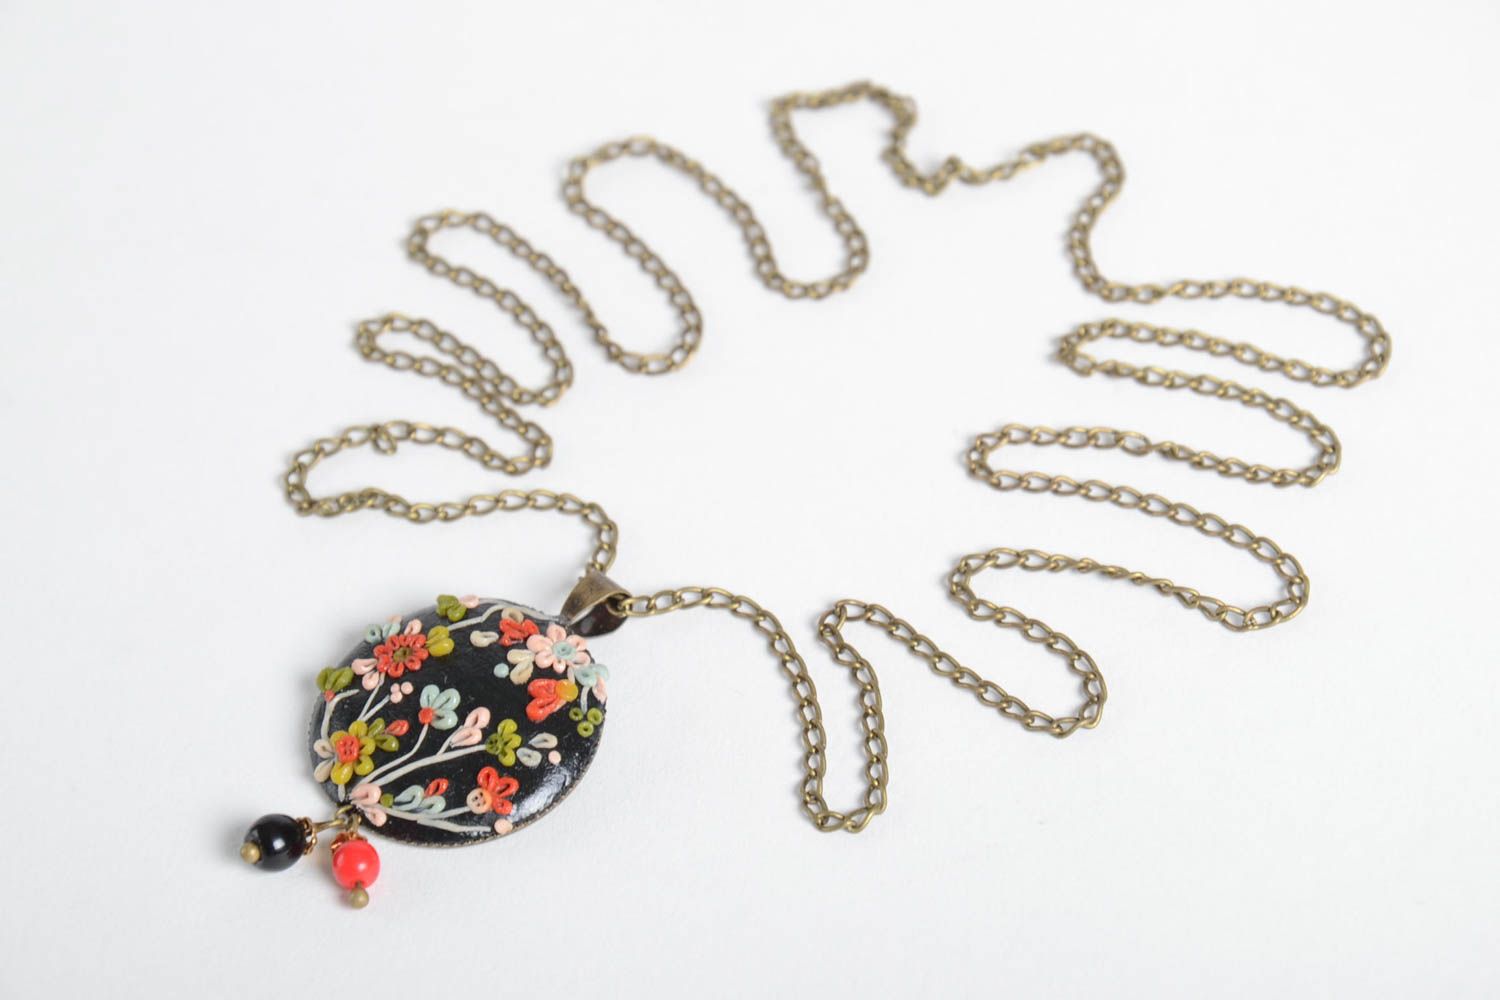 Stylish handmade plastic flower pendant costume jewelry designs gifts for her photo 3